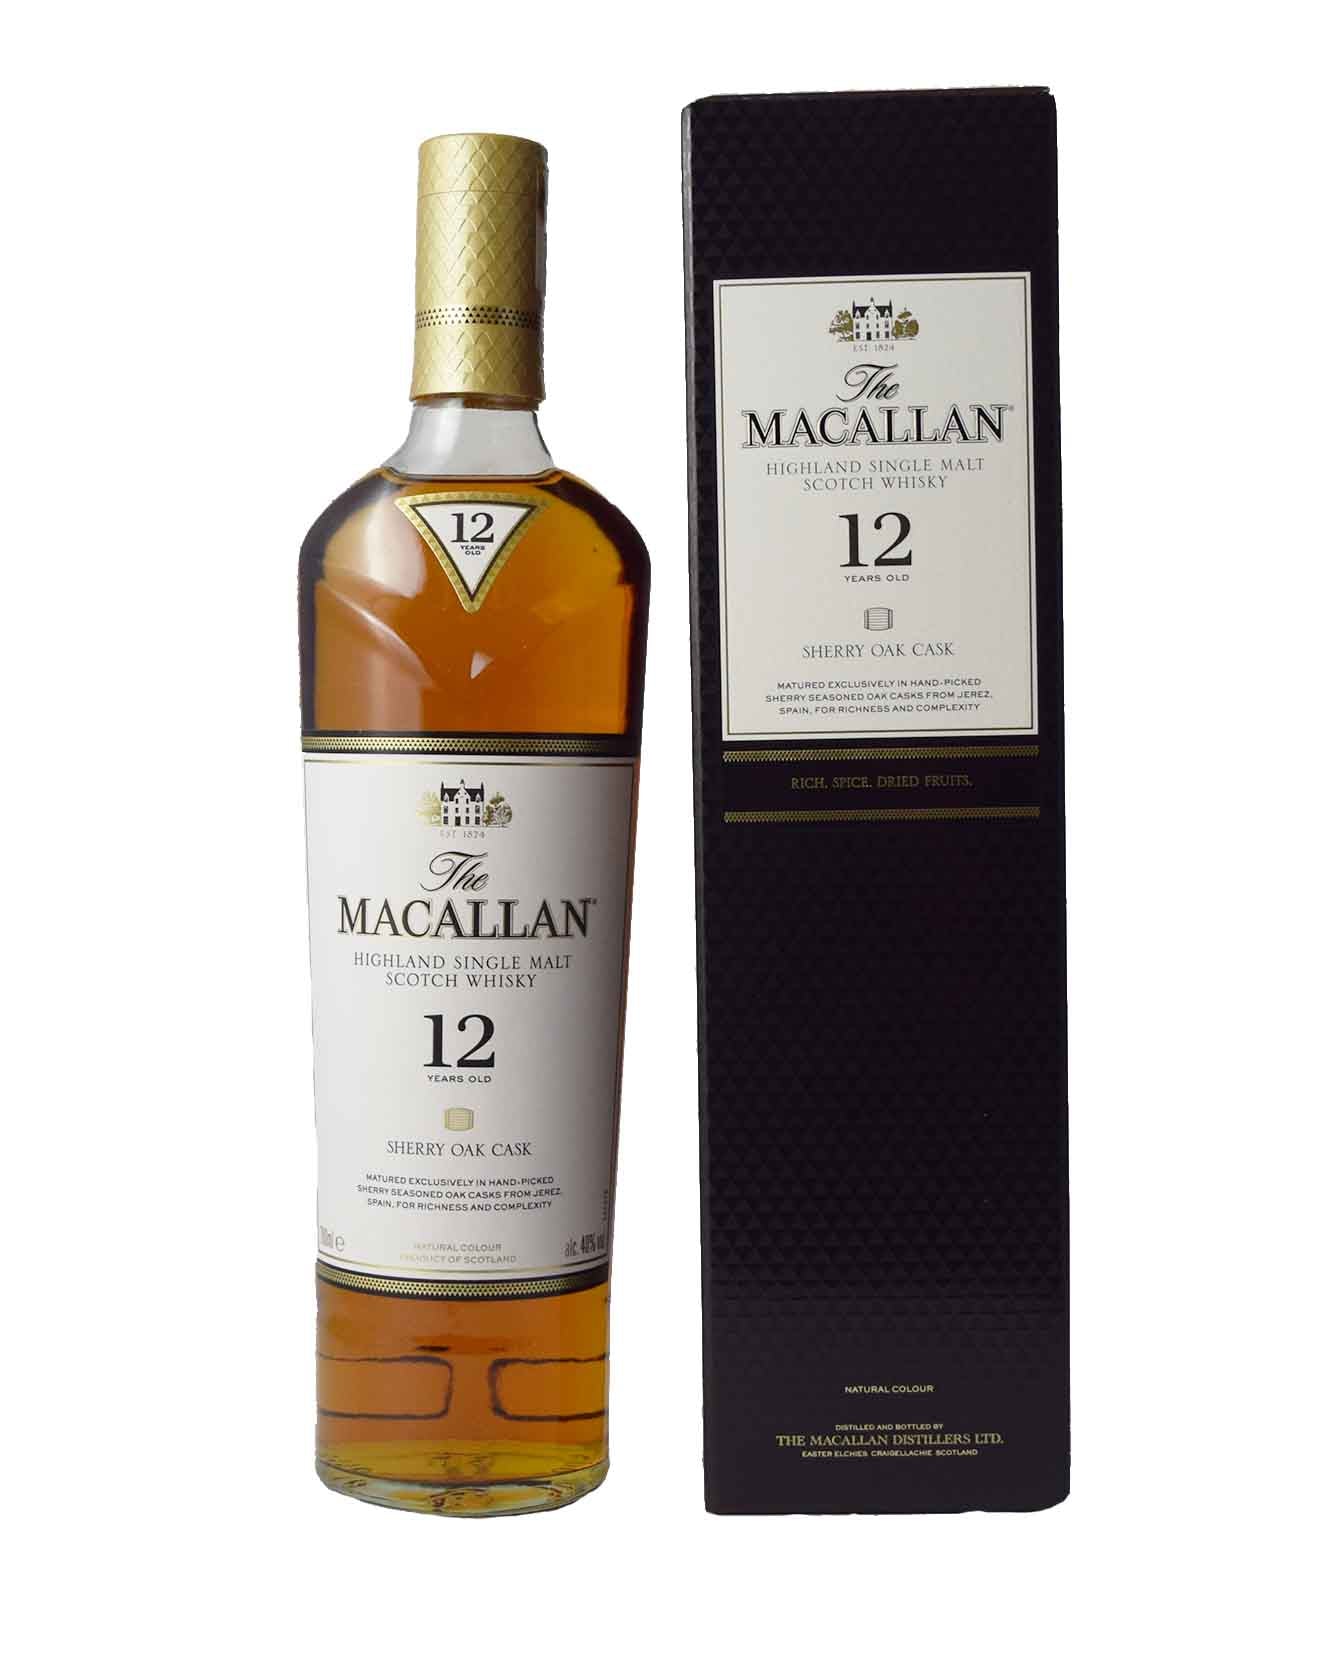 The Macallan Highland 12 Year Old Single Malt Scotch Whisky ABV